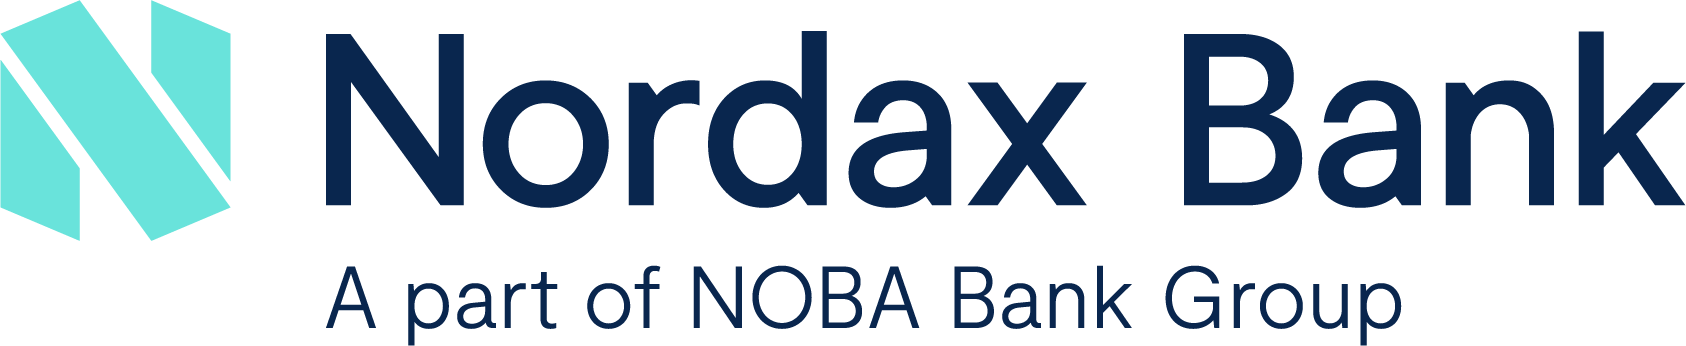 Nordax Bank, en del av NOBA Bank Group